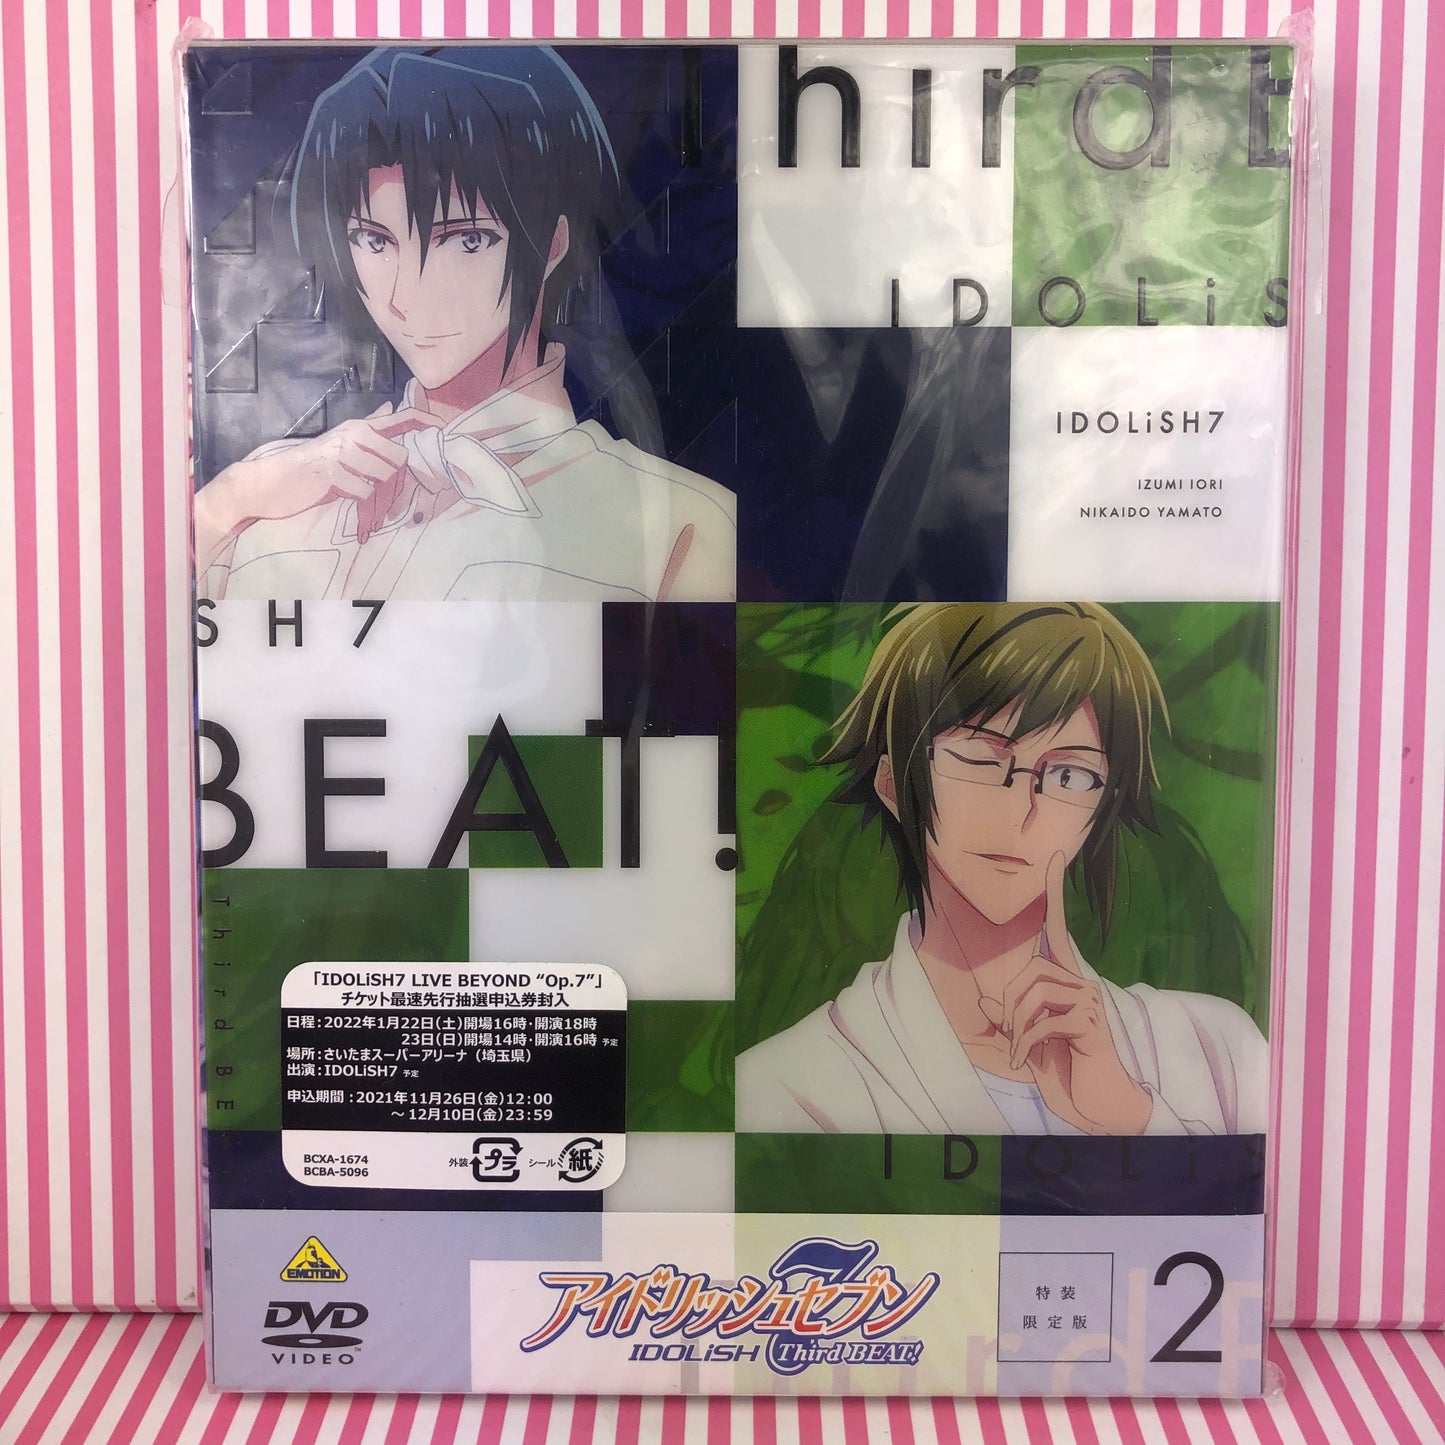 Bandai Namco Arts Jeu Blu-ray/Otome Idolish7 Troisième BEAT ! Édition spéciale limitée 2